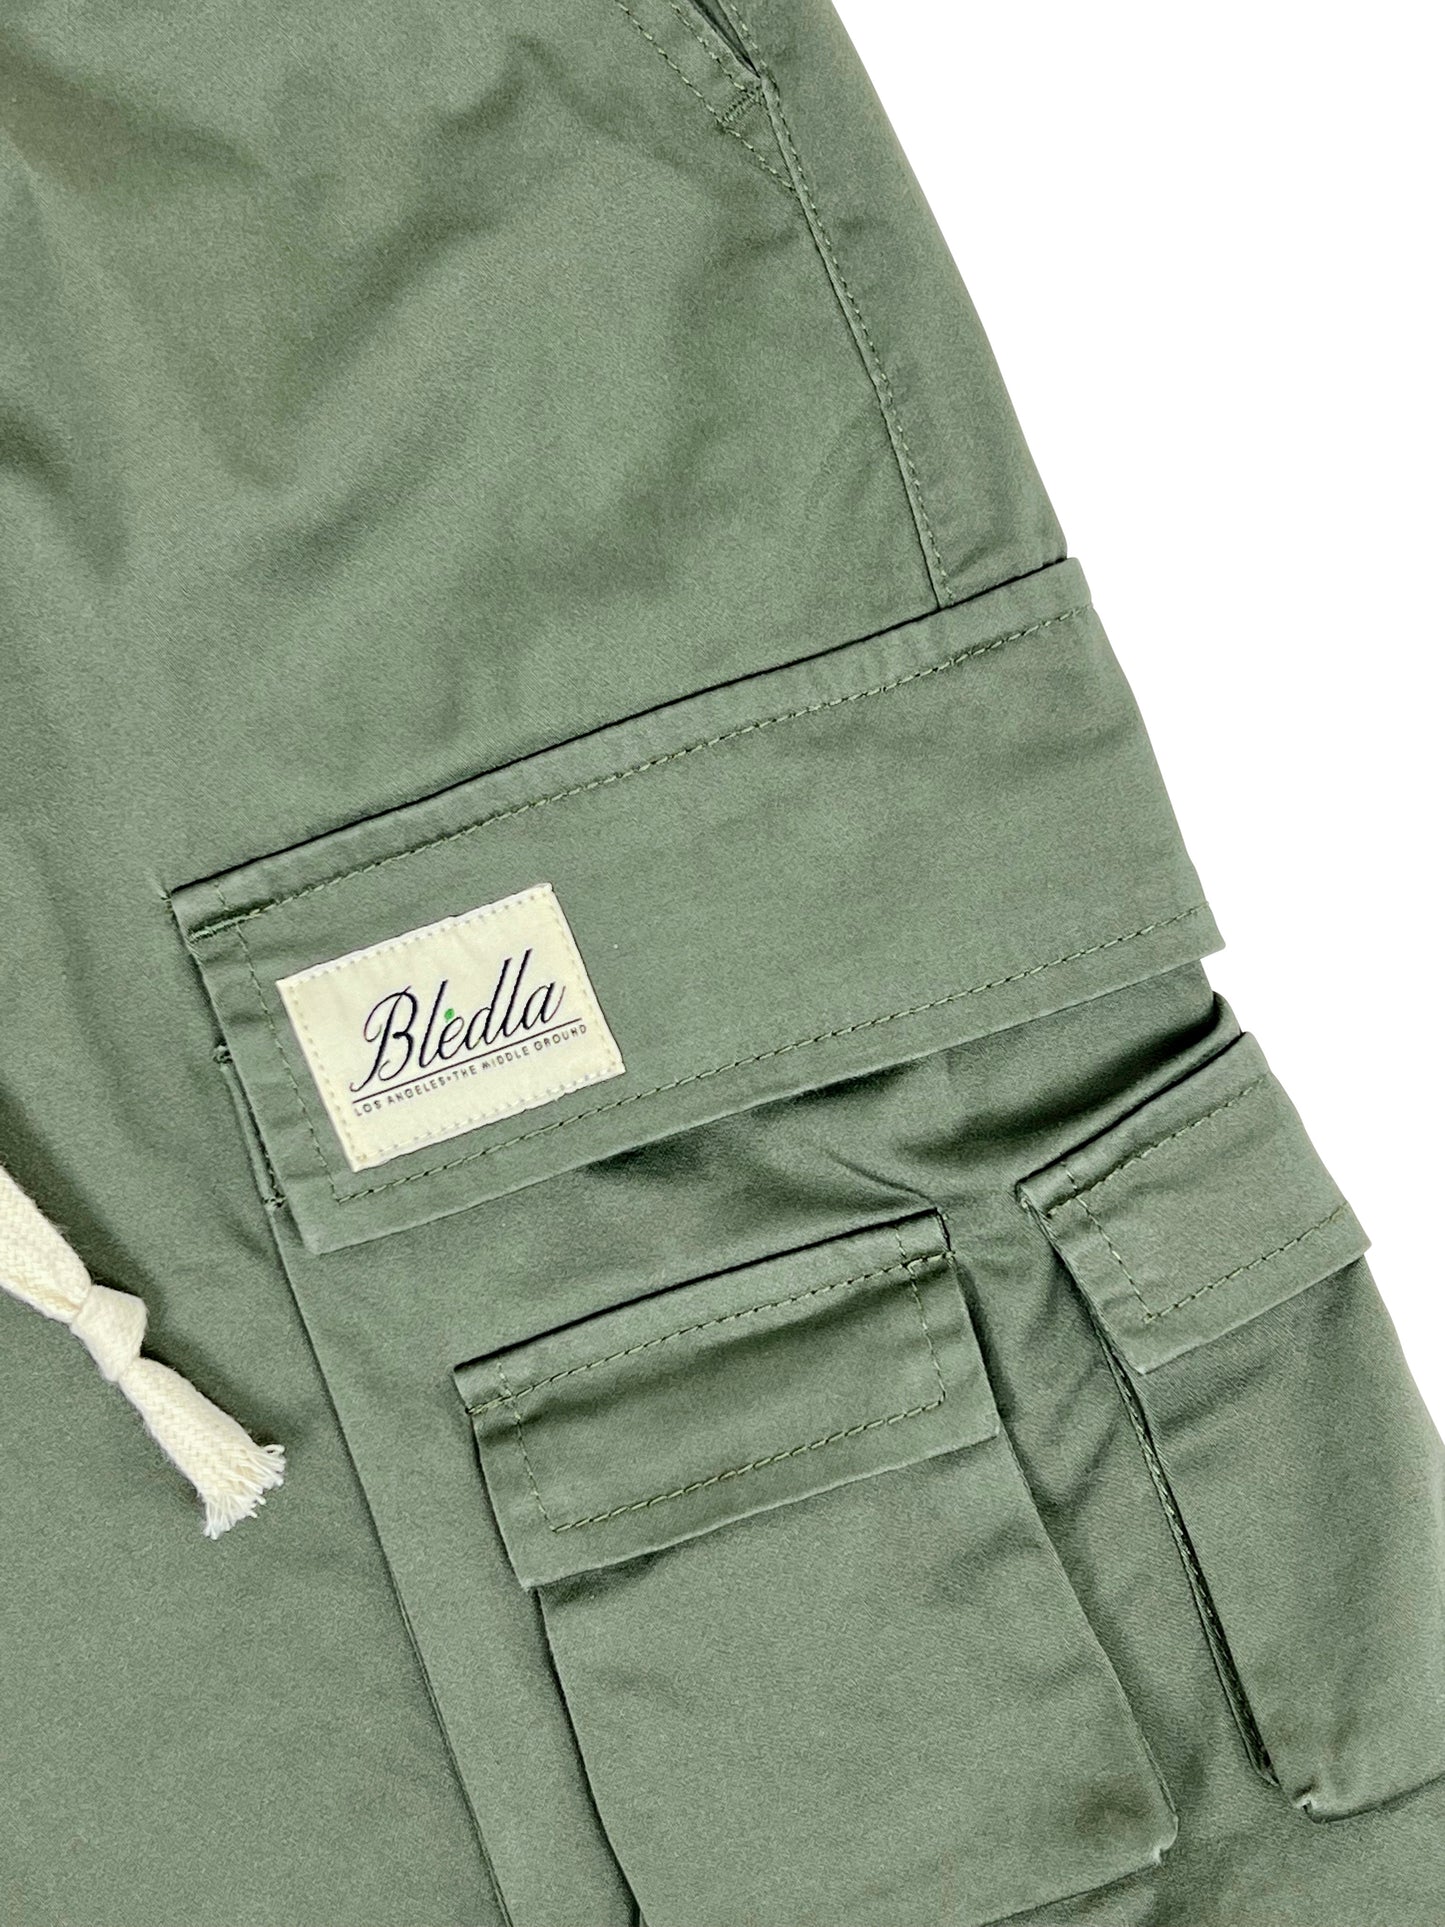 Bledla Multi Cargo Cotton Pant-Sage Green Cotton Cargo Pants-Multi Pocket Pant-Bled Streetwear Pant-Bled Pant-Drawstring Cargo Pant-Vintage Cargo Pant-Olive Cargo Pants